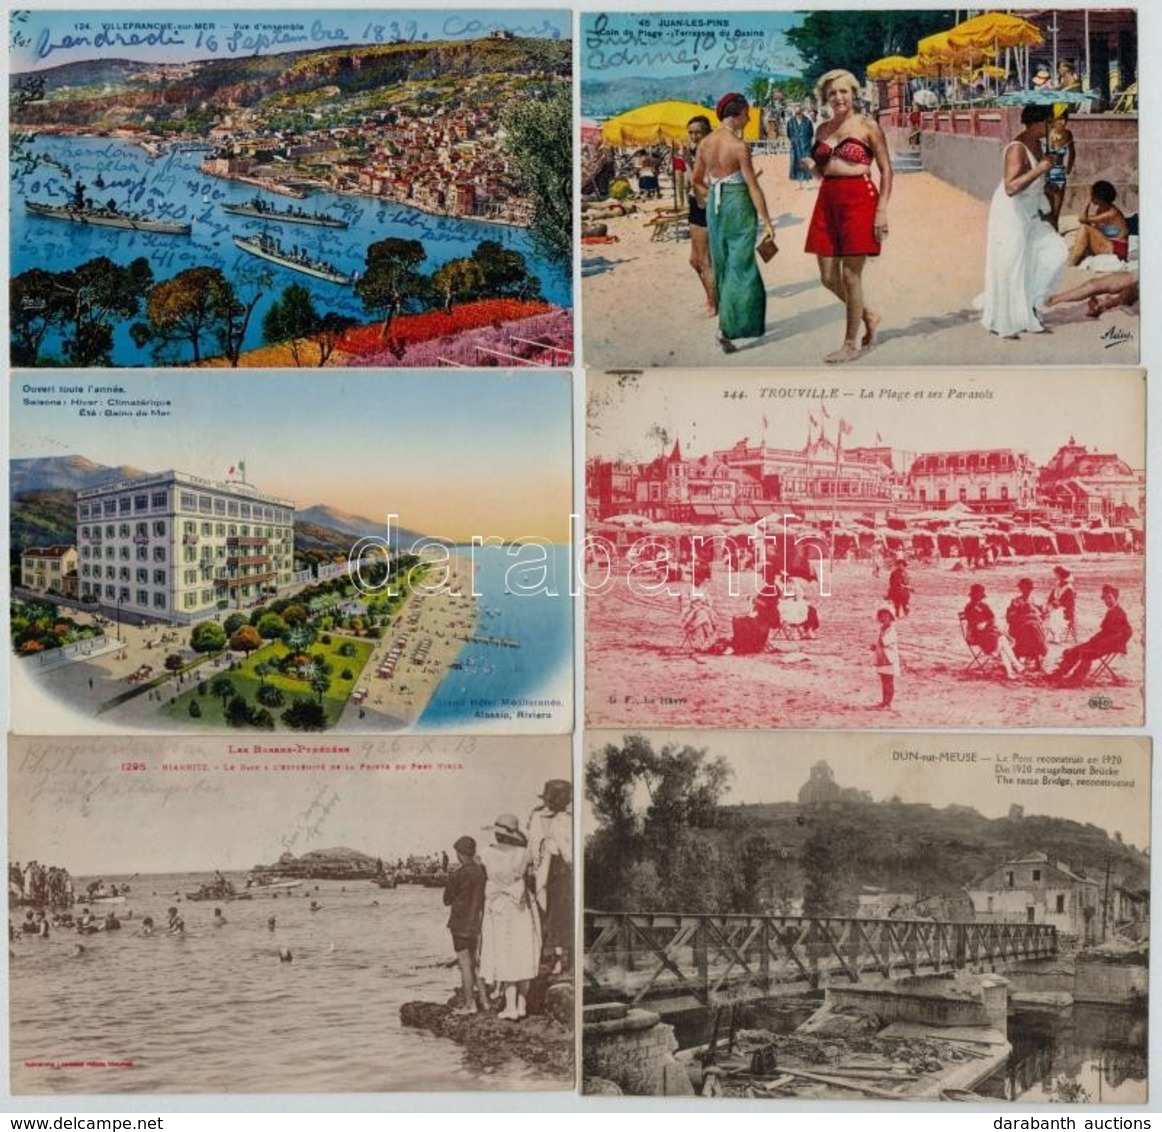 ** * 63 Db RÉGI Francia Városképes Lap / 63 French Town-view Postcards - Non Classés